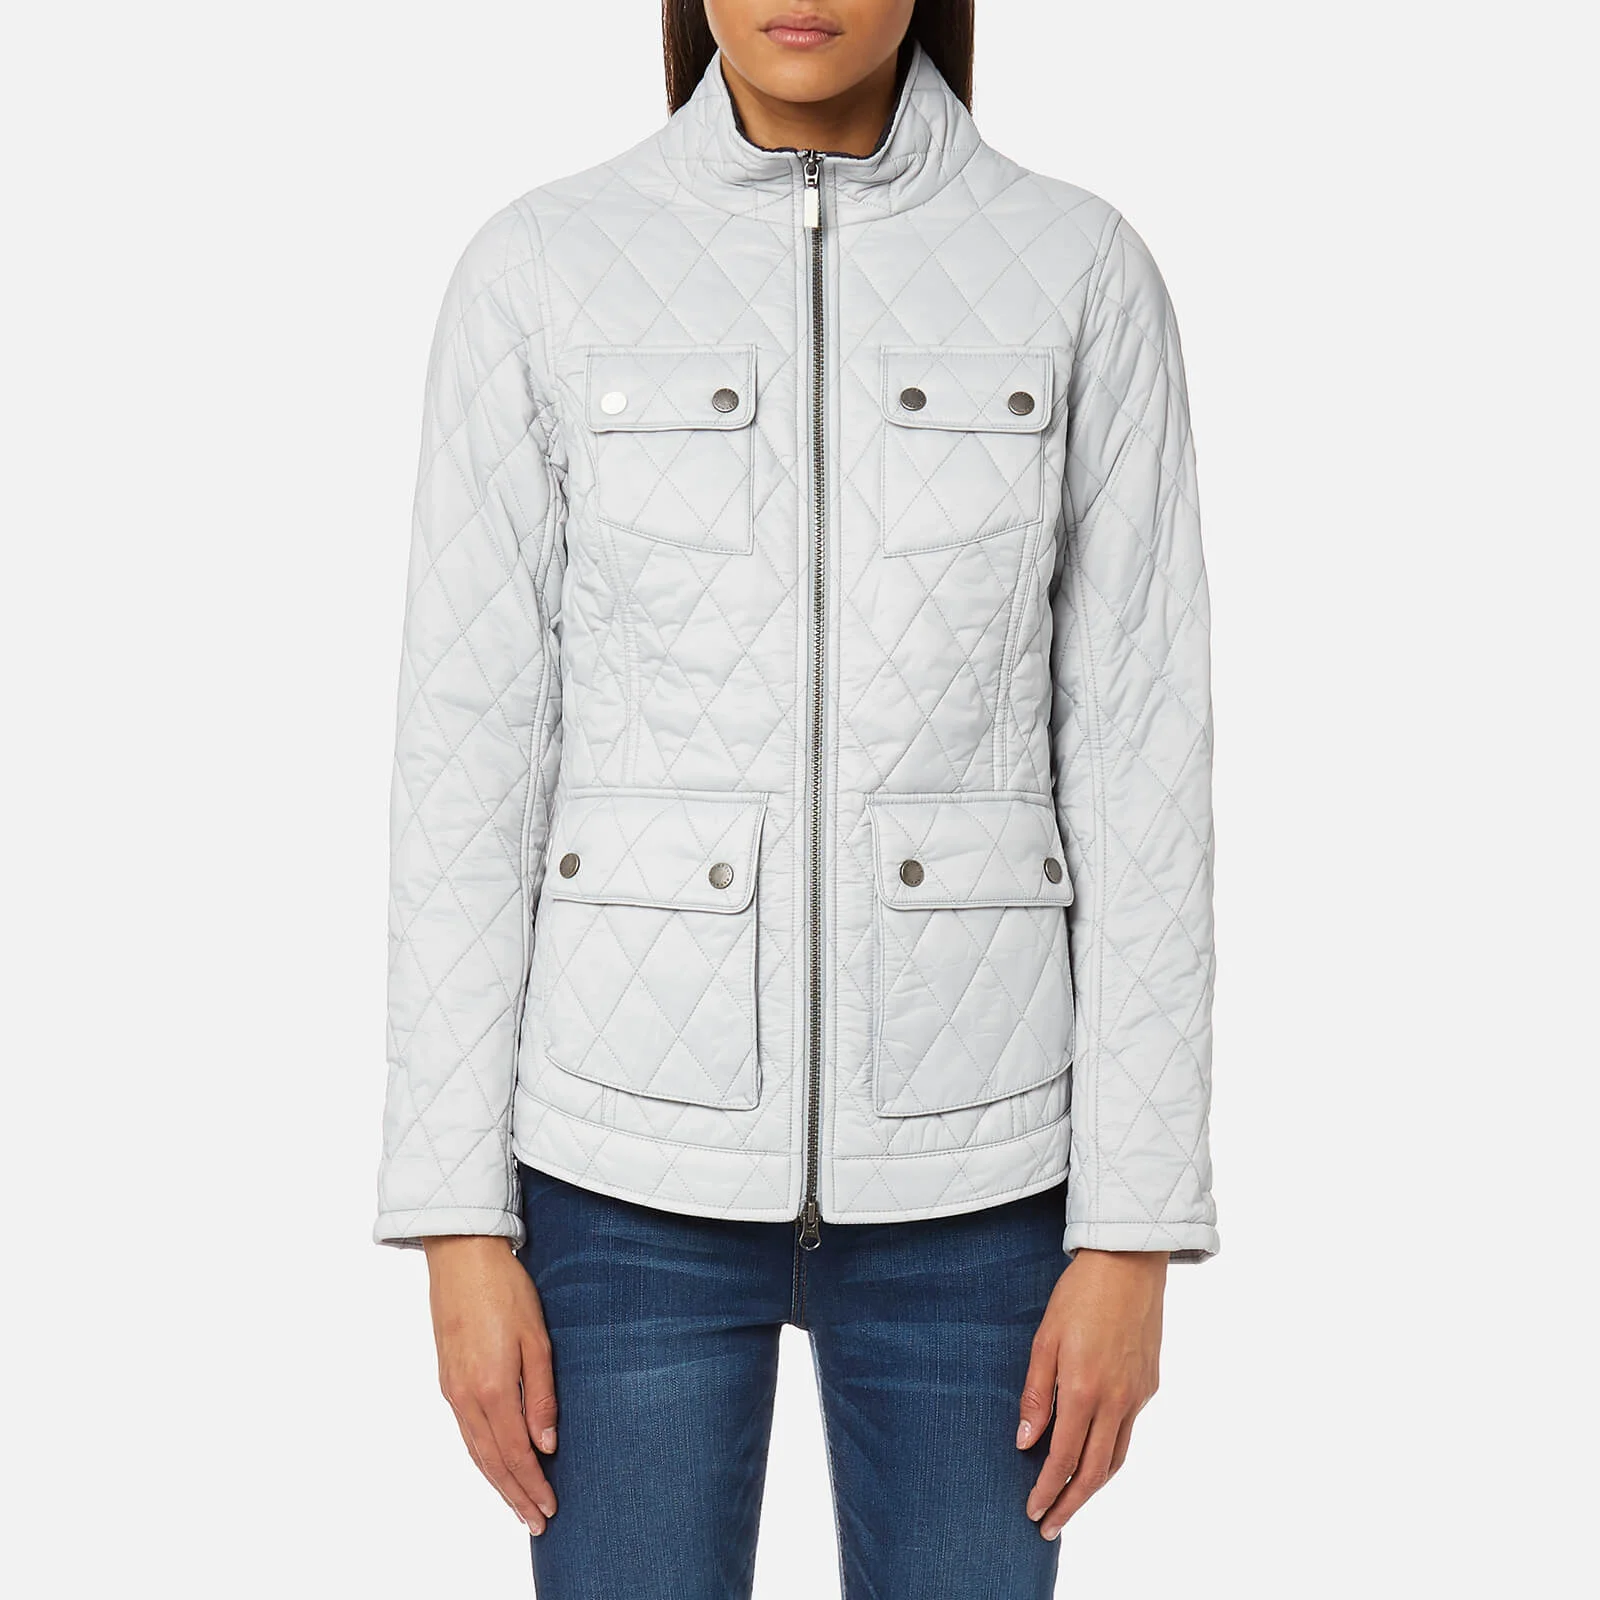 Barbour Women's Dolostone Quilt Jacket - Ice White Image 1